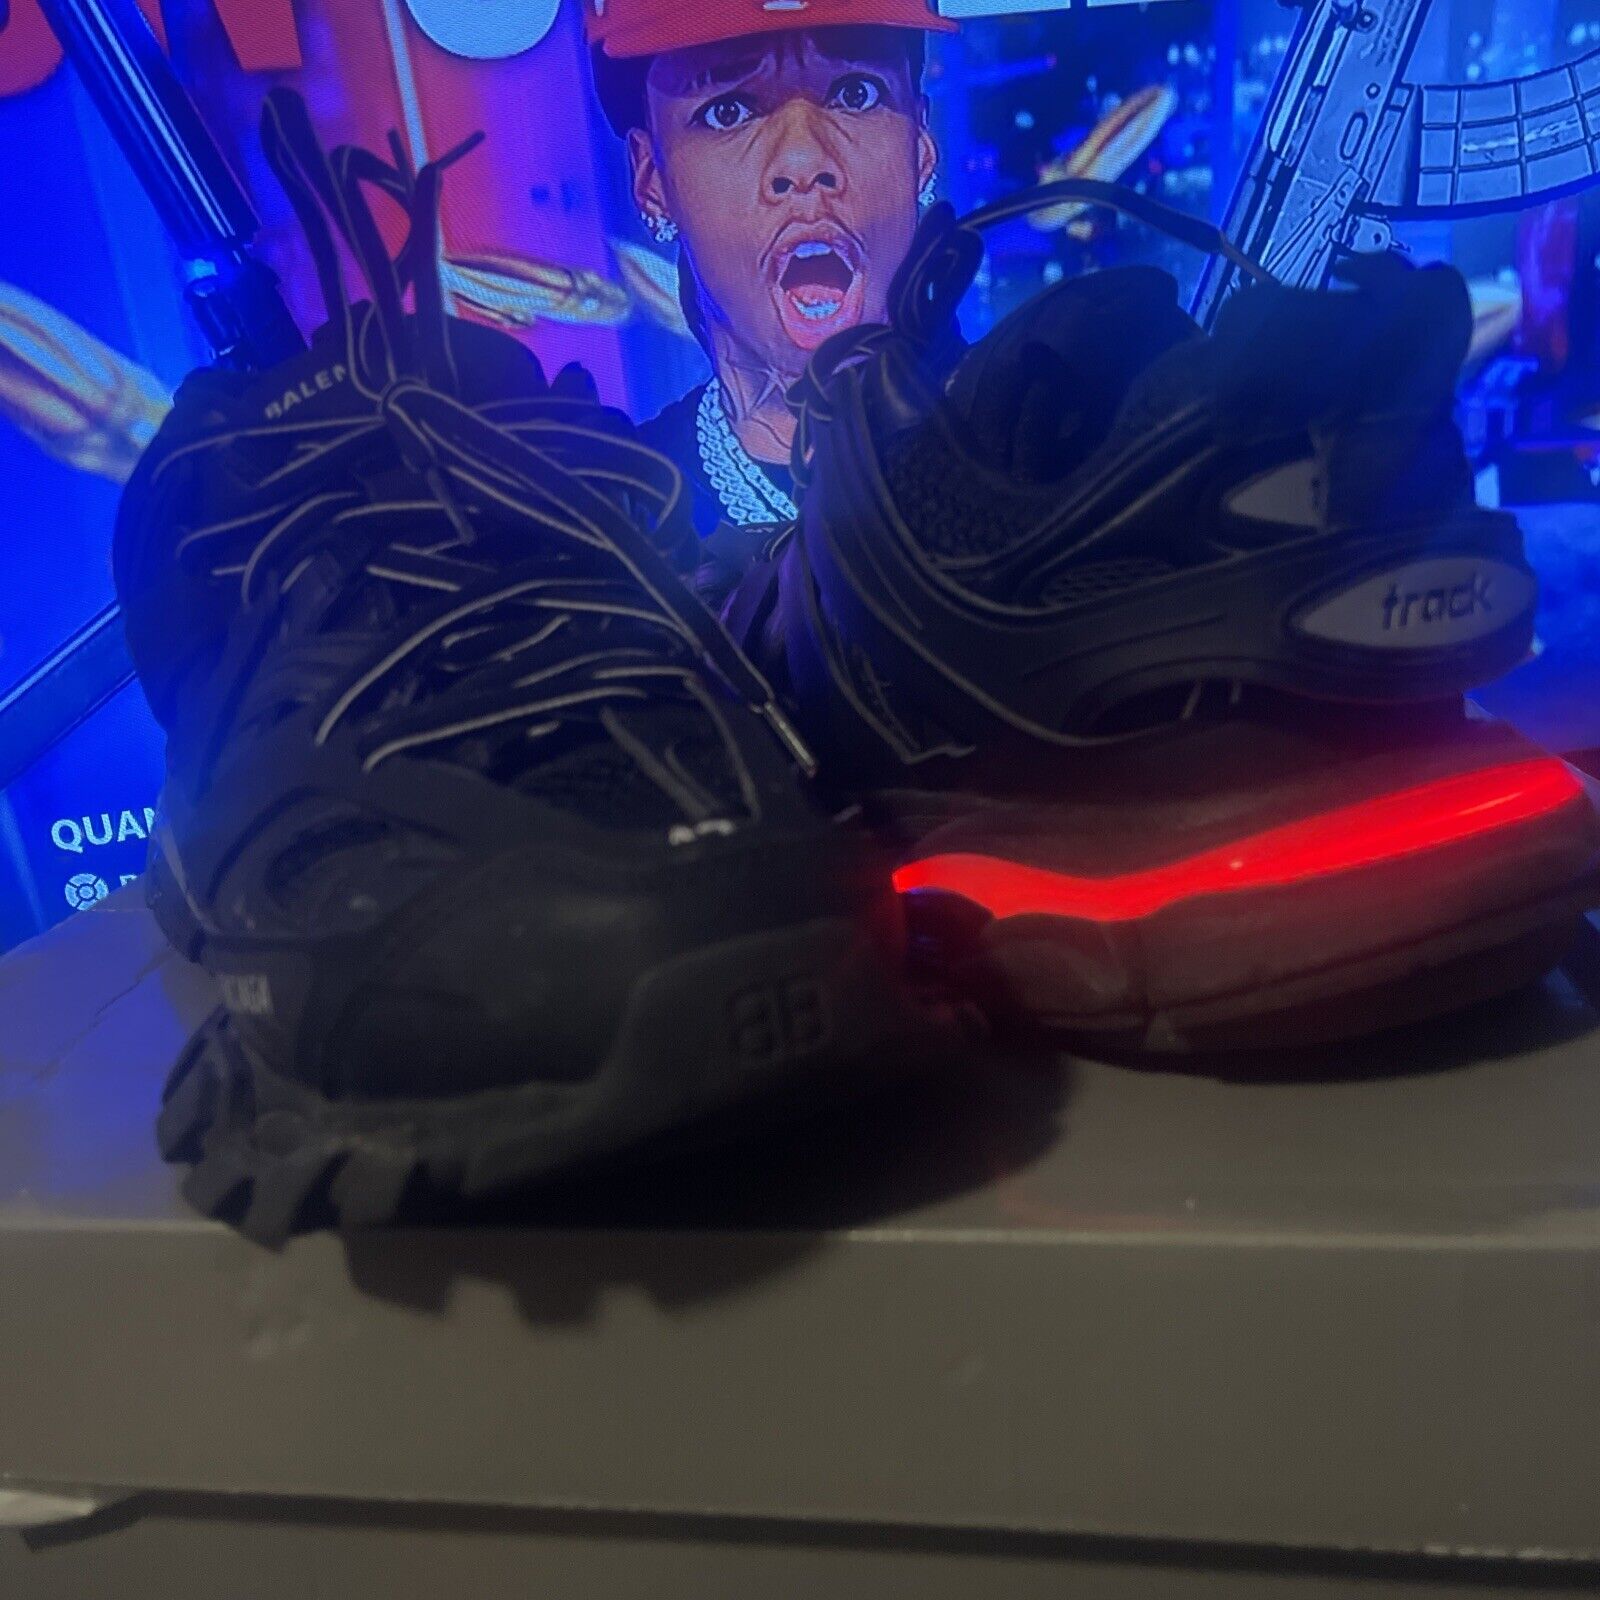 Size 9 - Balenciaga Track LED Sneaker Black